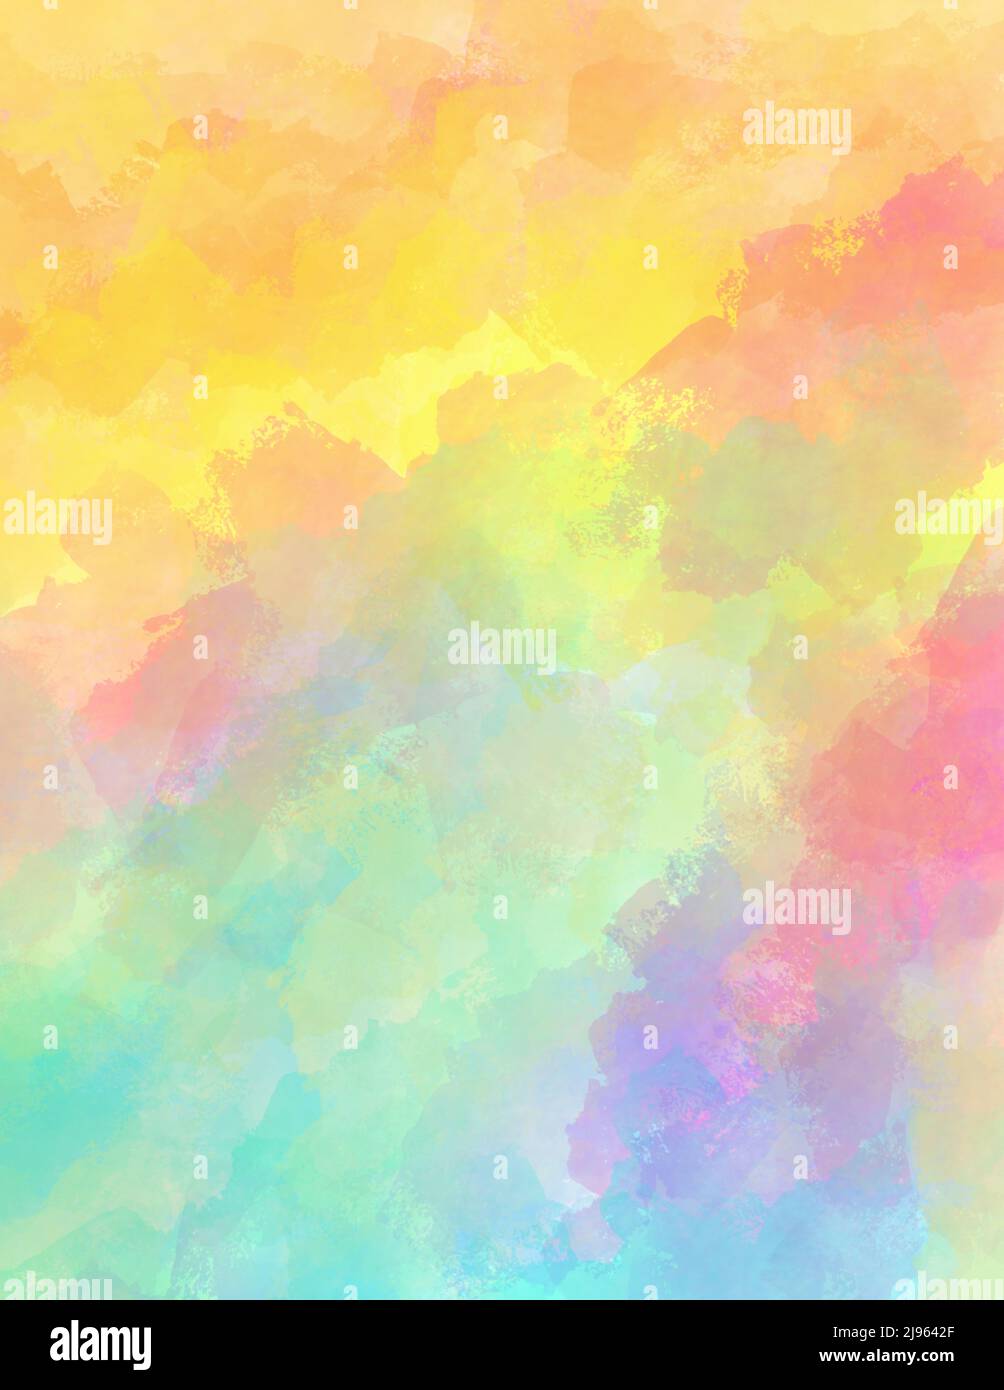 Abstrakt farbenfroher Hintergrund in digitaler Aquarellfarbe, Sonnenaufgang oder Sonnenuntergang Himmelfarben für Ostern, Aquarelltextur in gelb rosa blau lila Orang Stockfoto